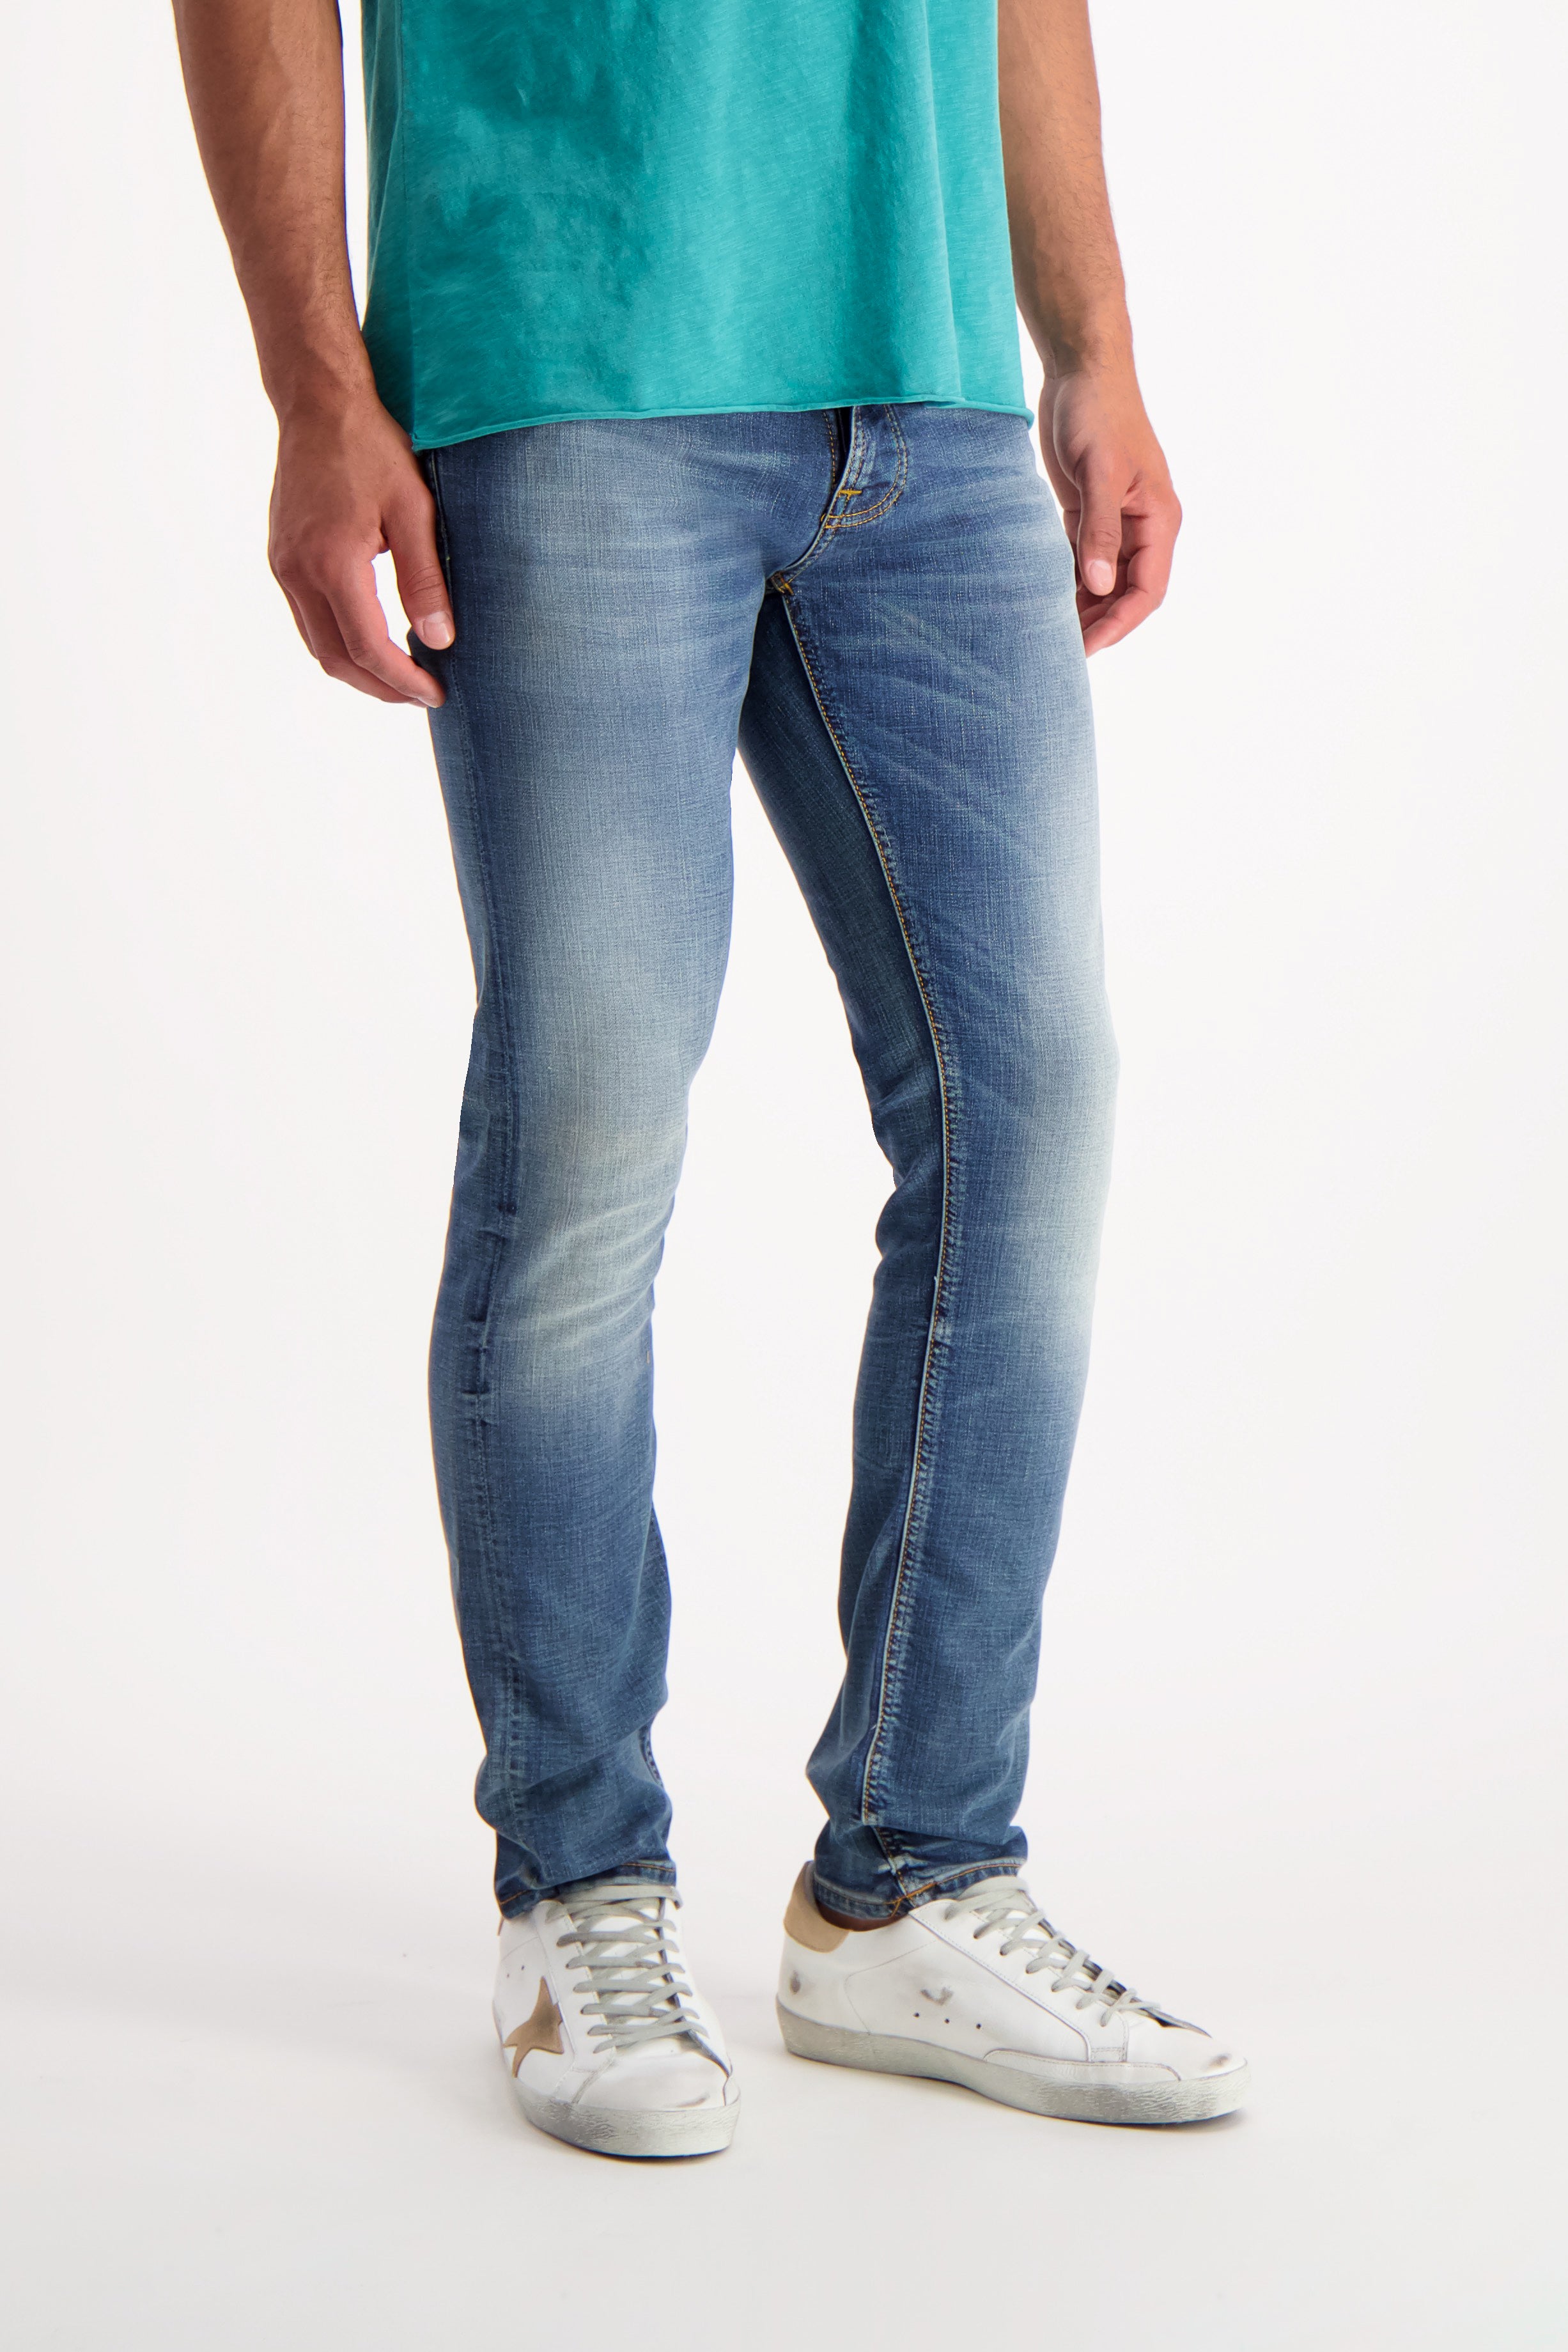 nudie jeans canada